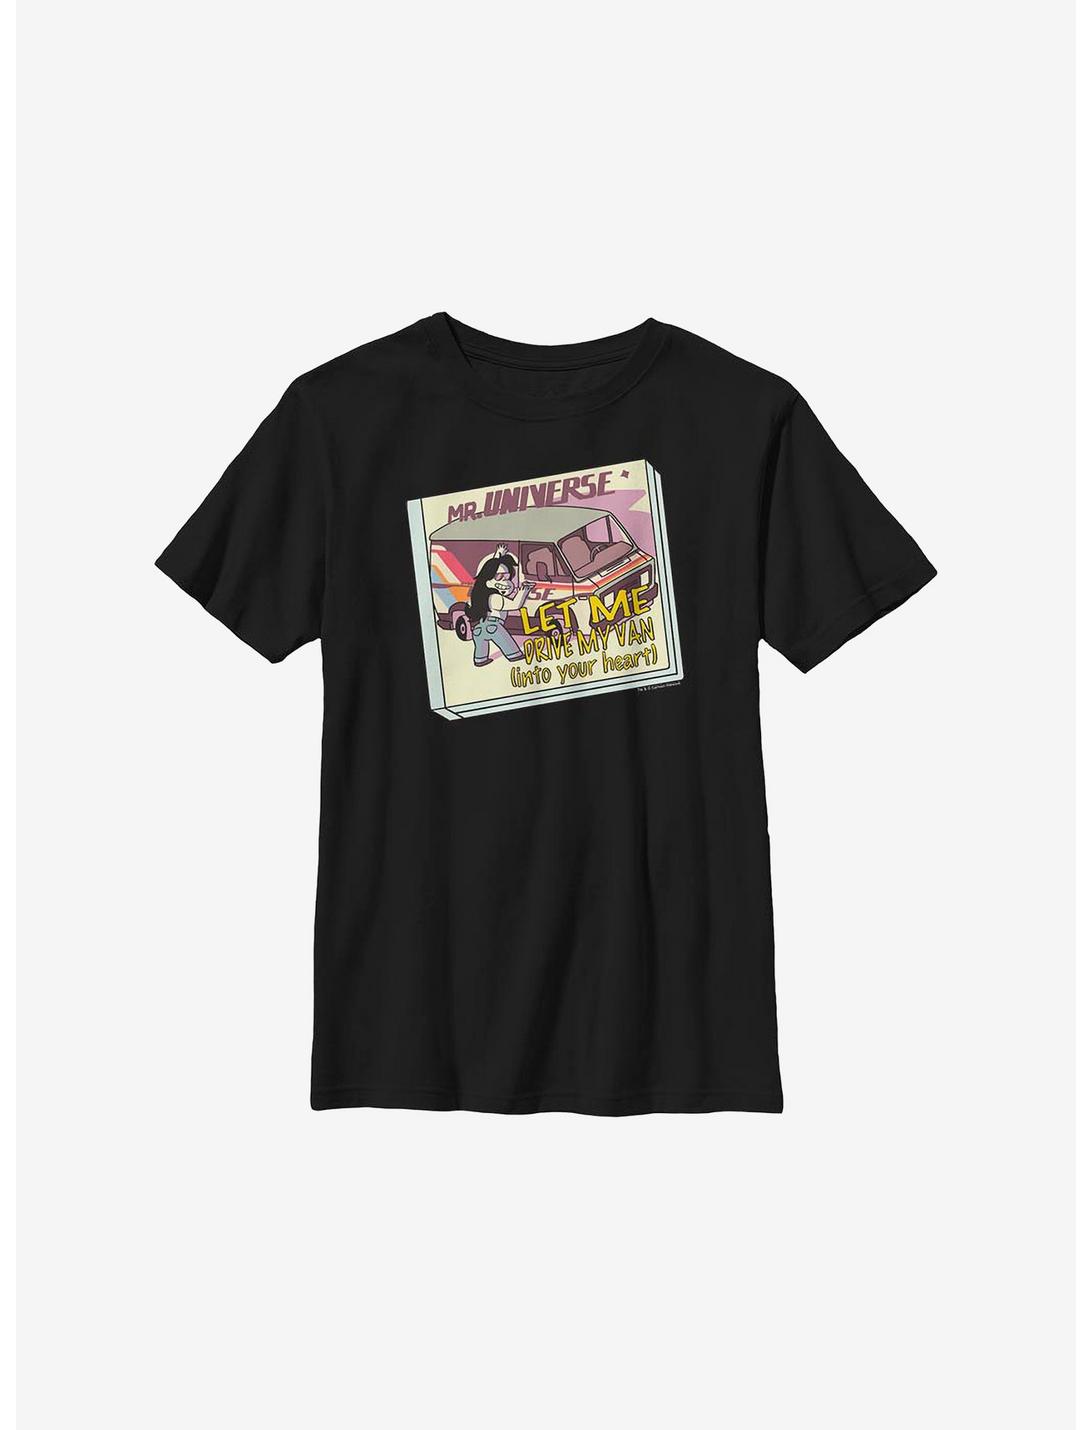 Steven Universe Drive Van Youth T-Shirt, BLACK, hi-res